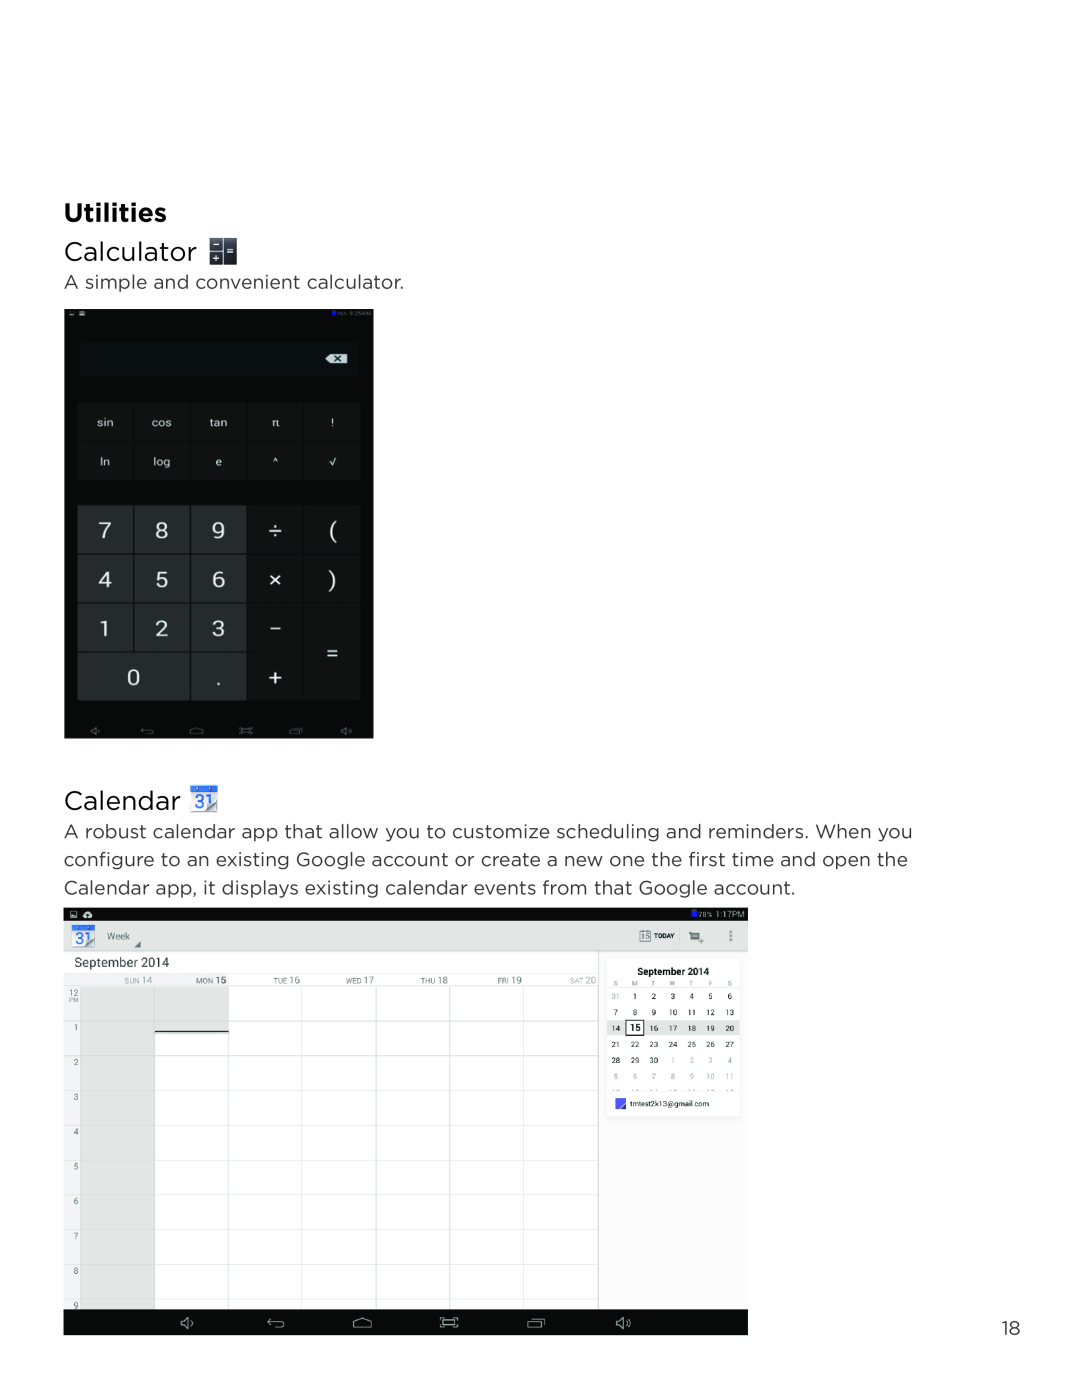 NuVision TM1218 user manual Calculator, Calendar, Utilities 